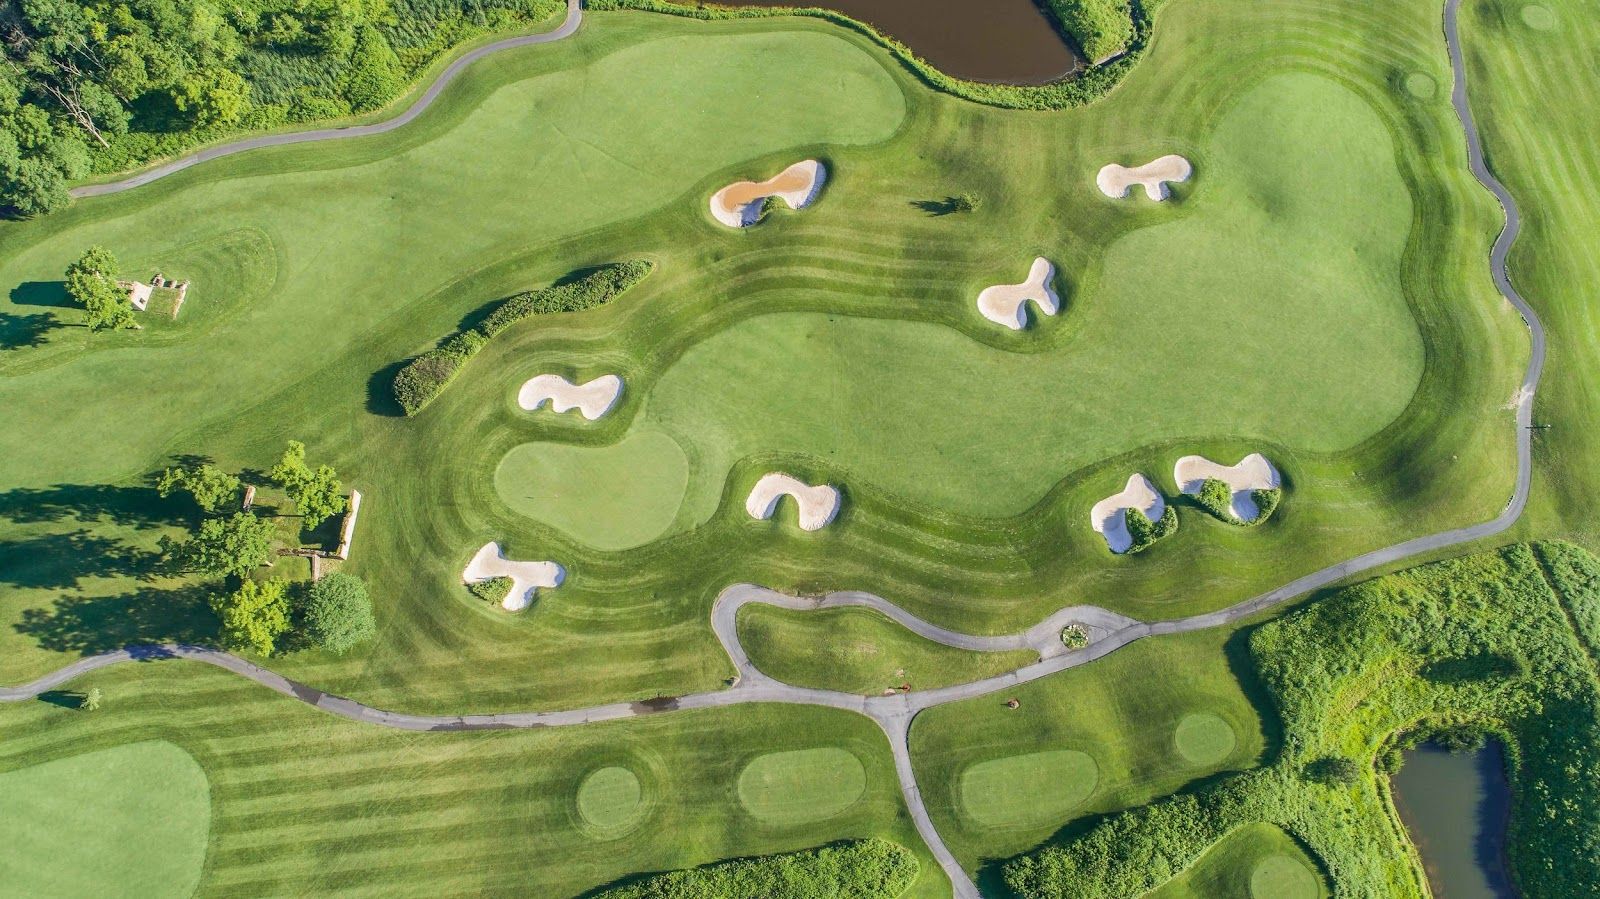 Whiskey Creek Golf Club - Golf in Ijamsville, USA